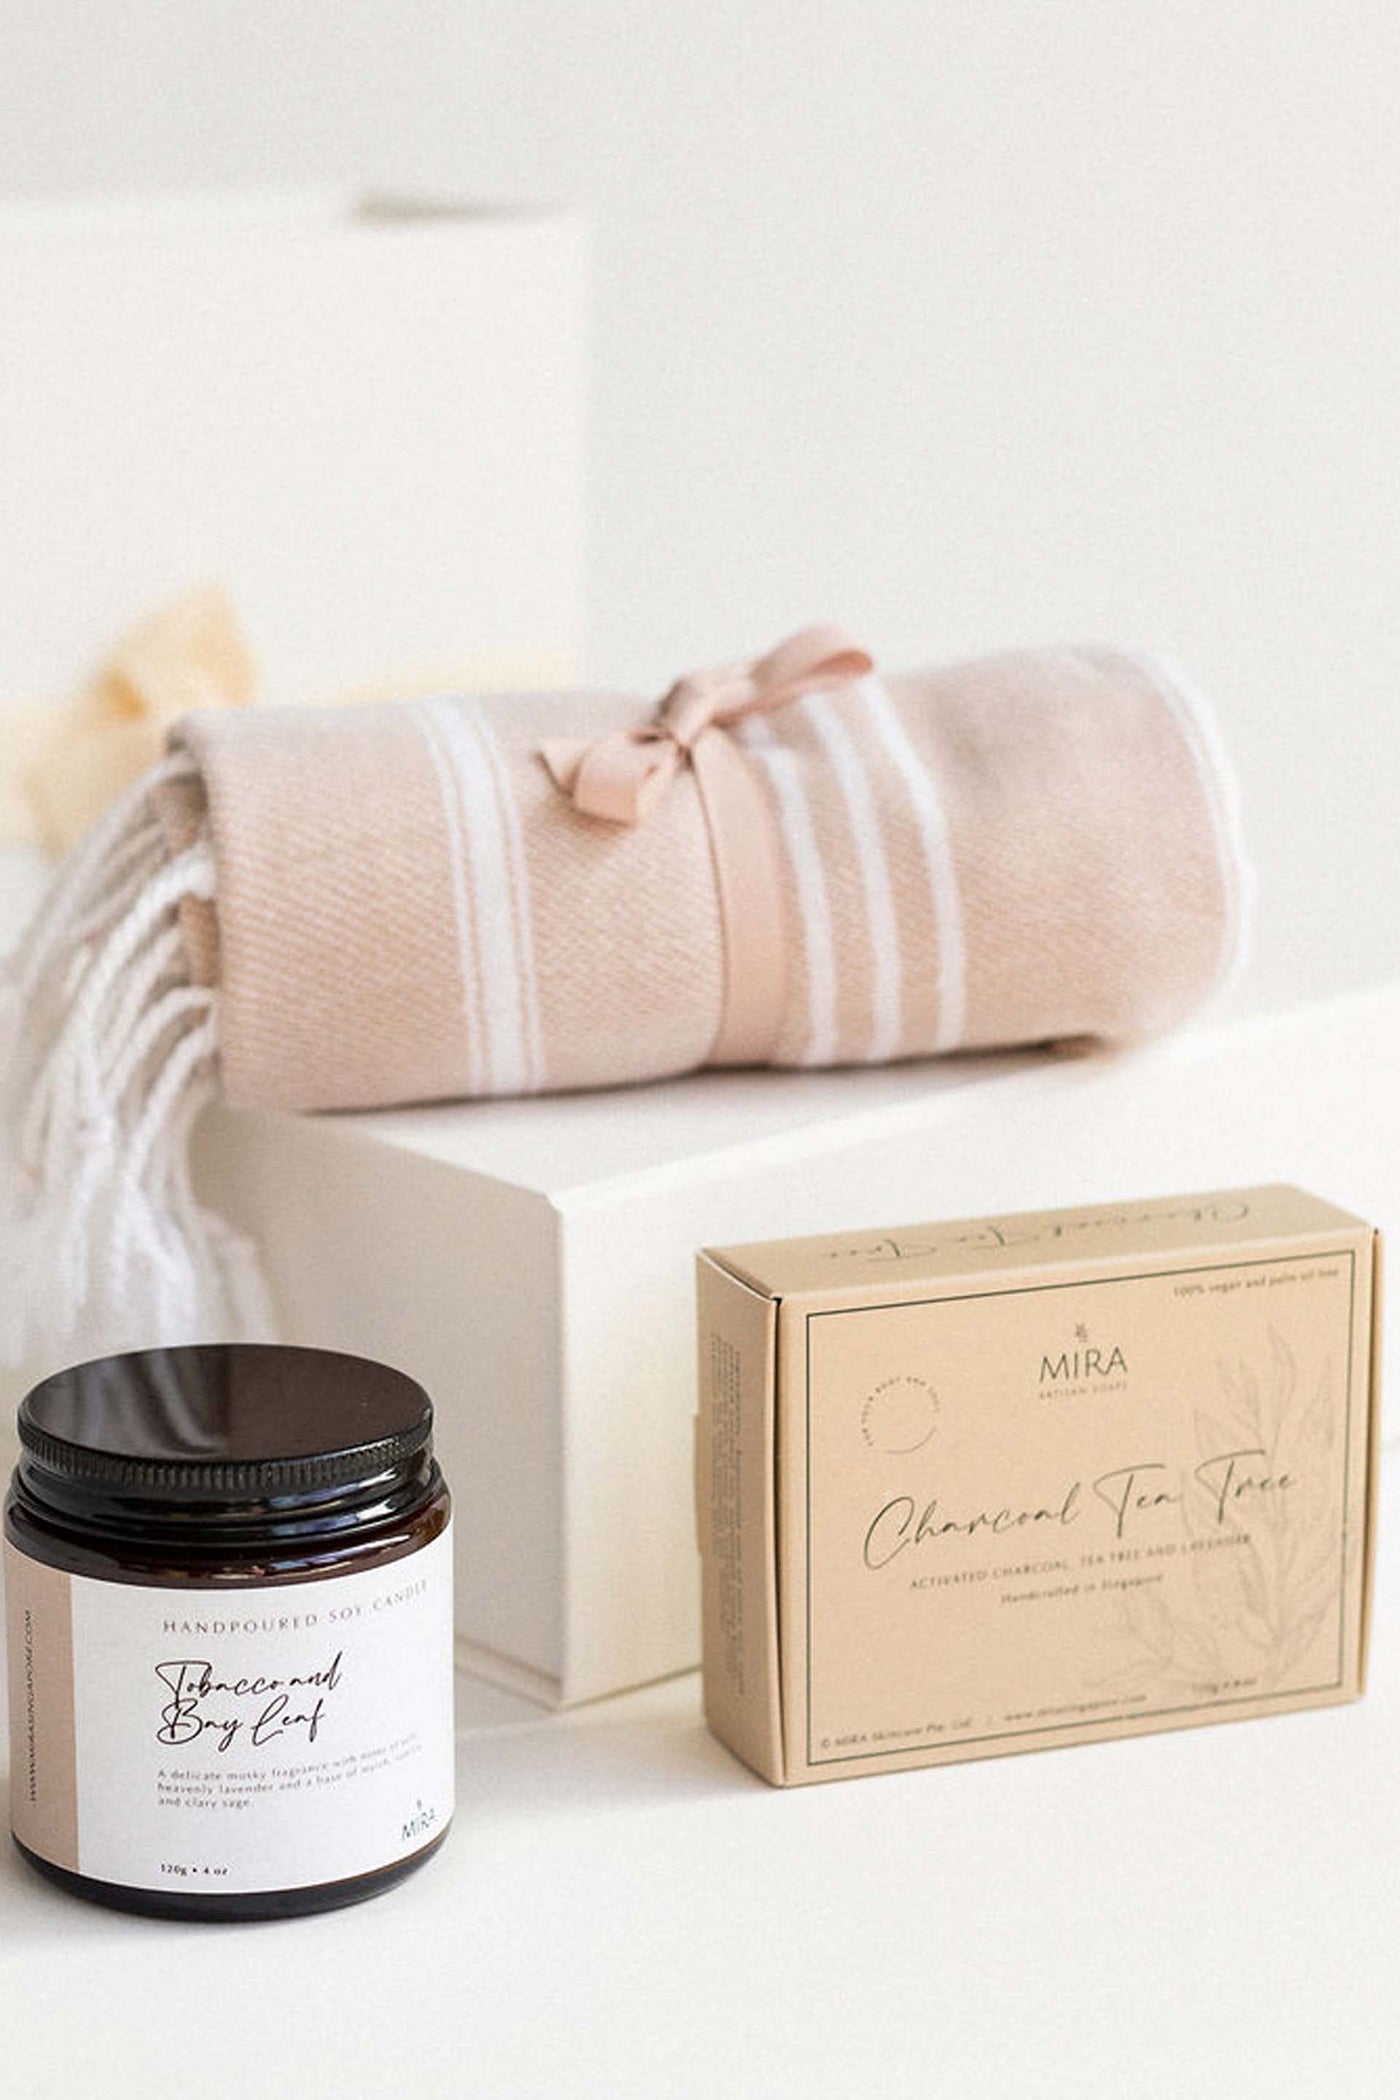 Bath and Body Gift Box